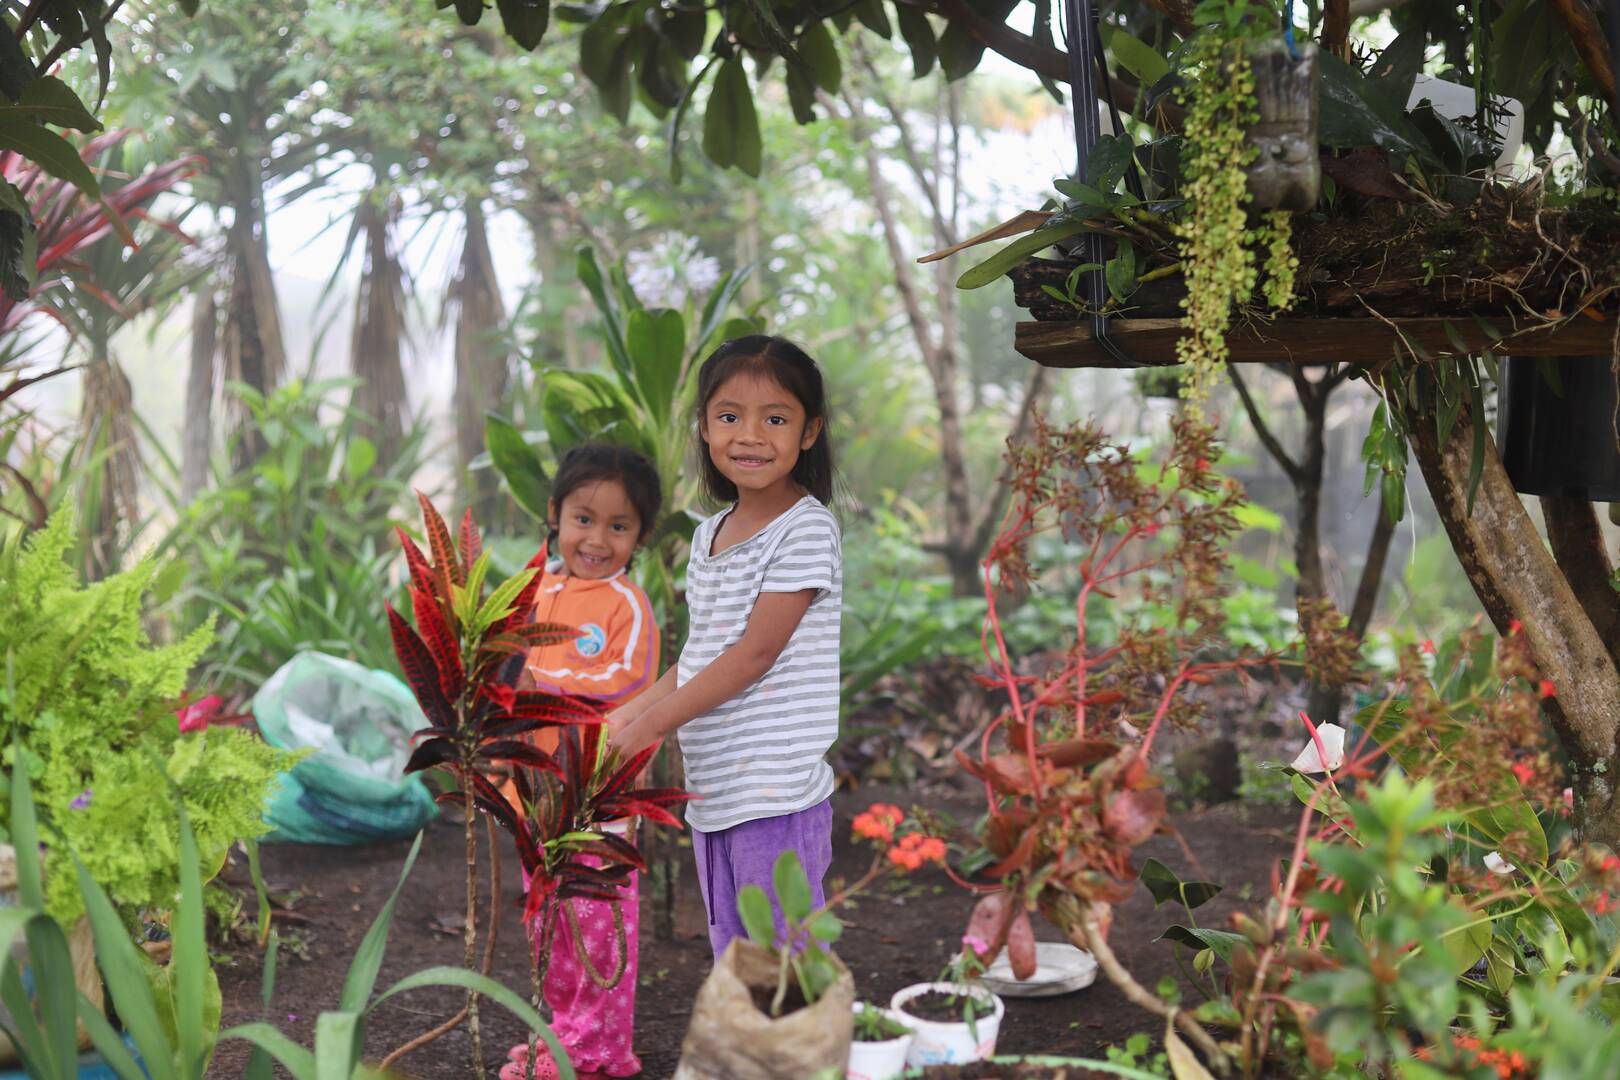 Two Honduran children play in a family garden